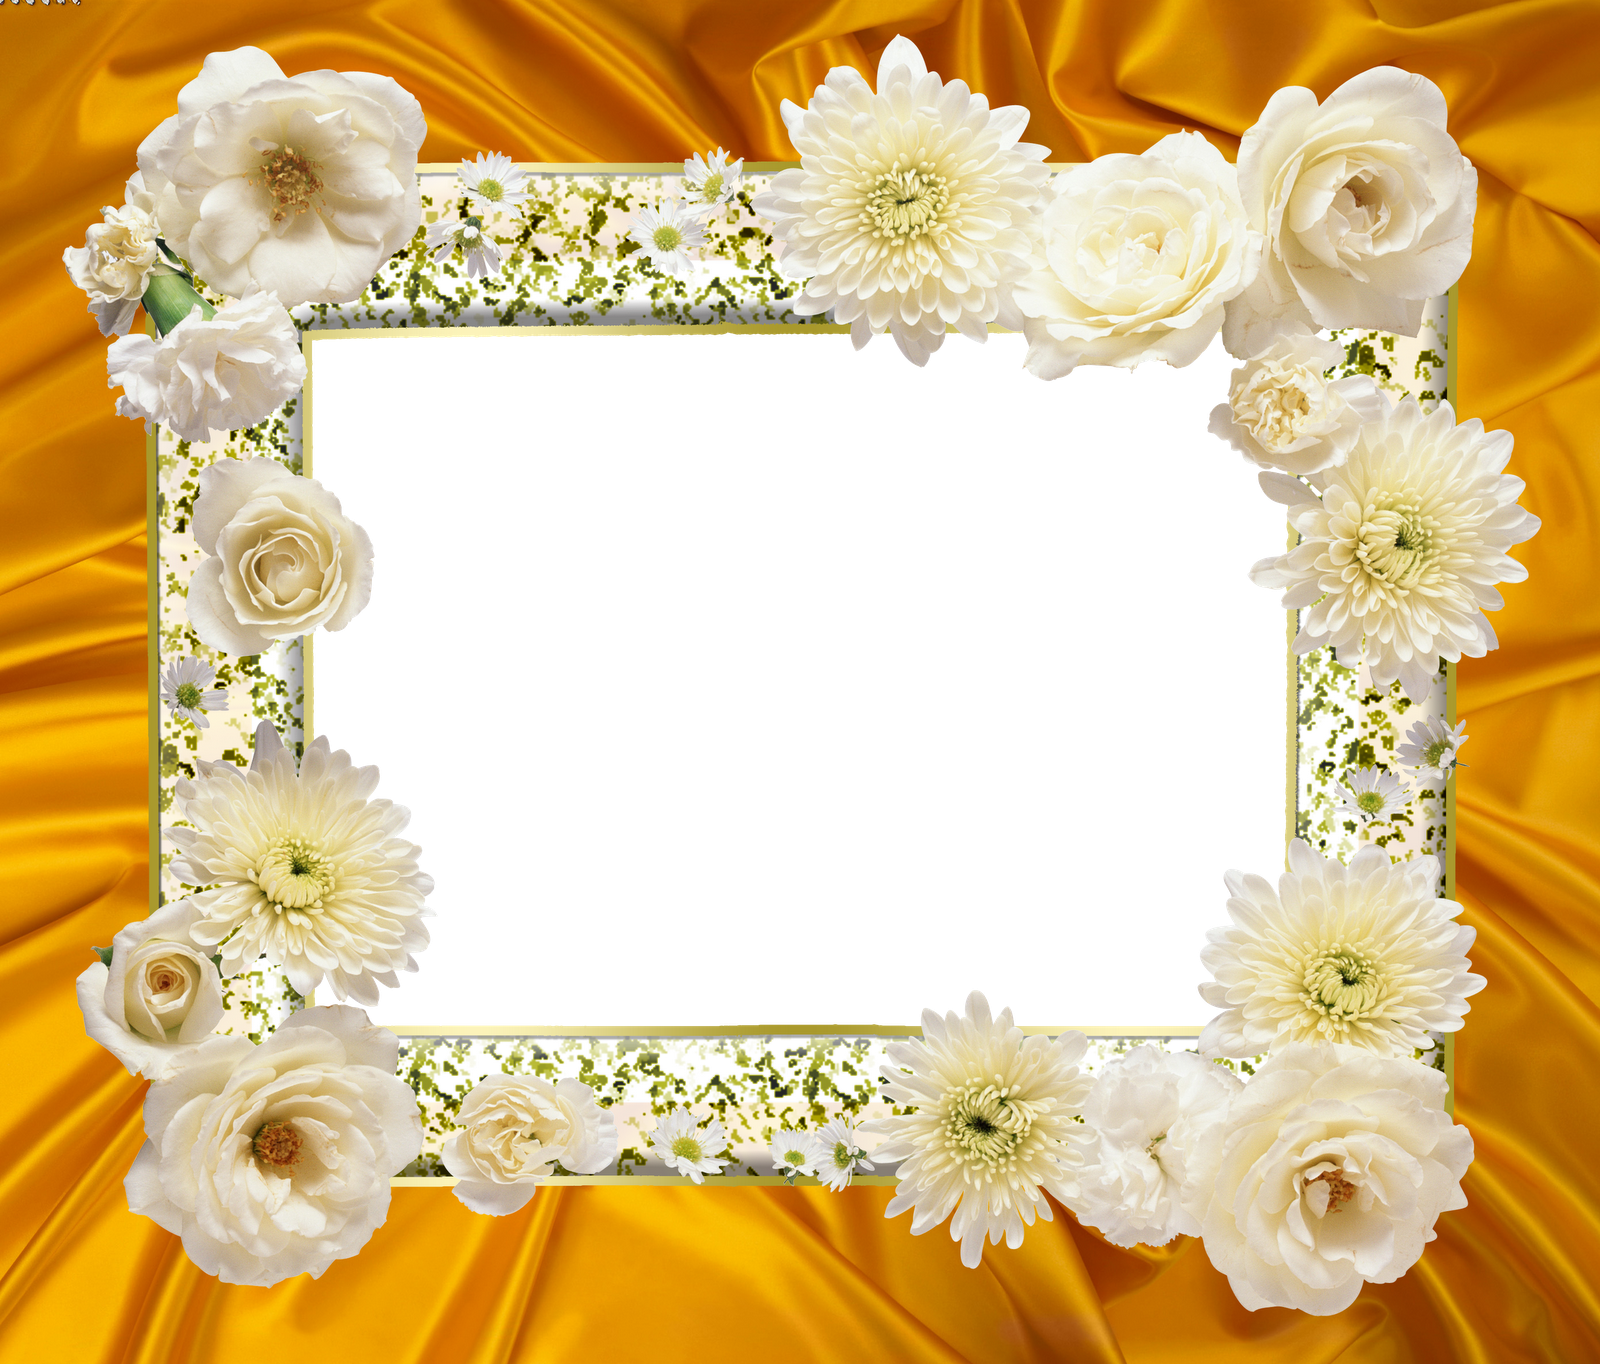 photoshop.png frames wallpapers designs: flower frame pack .png